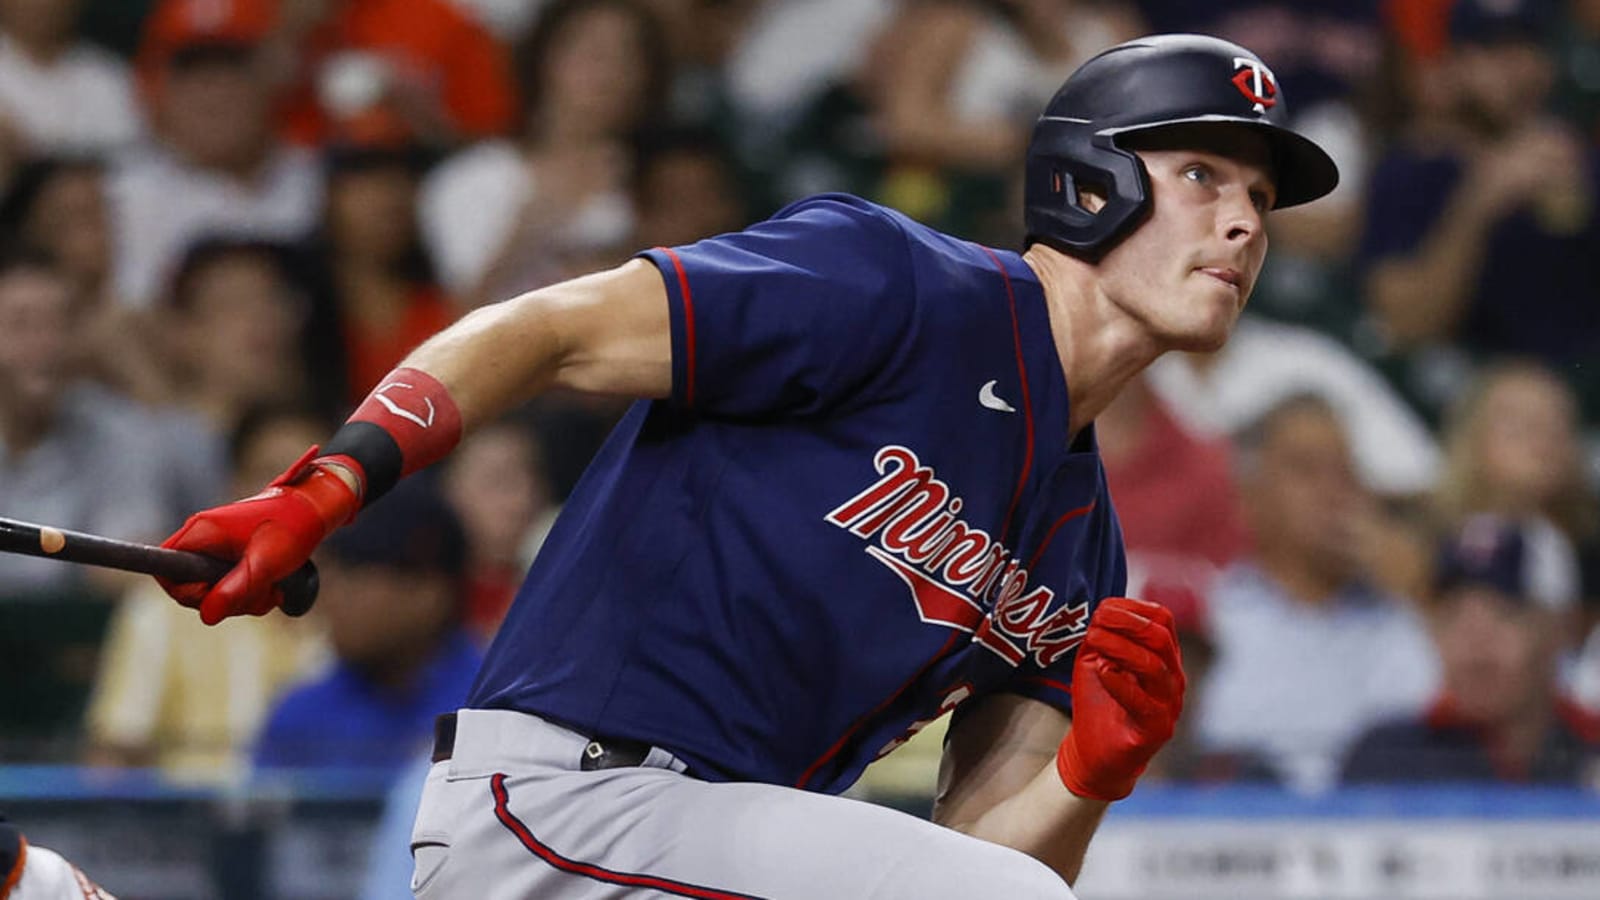 Max Kepler 22nd Home Run of the Season #Twins #MLB Distance: 425ft